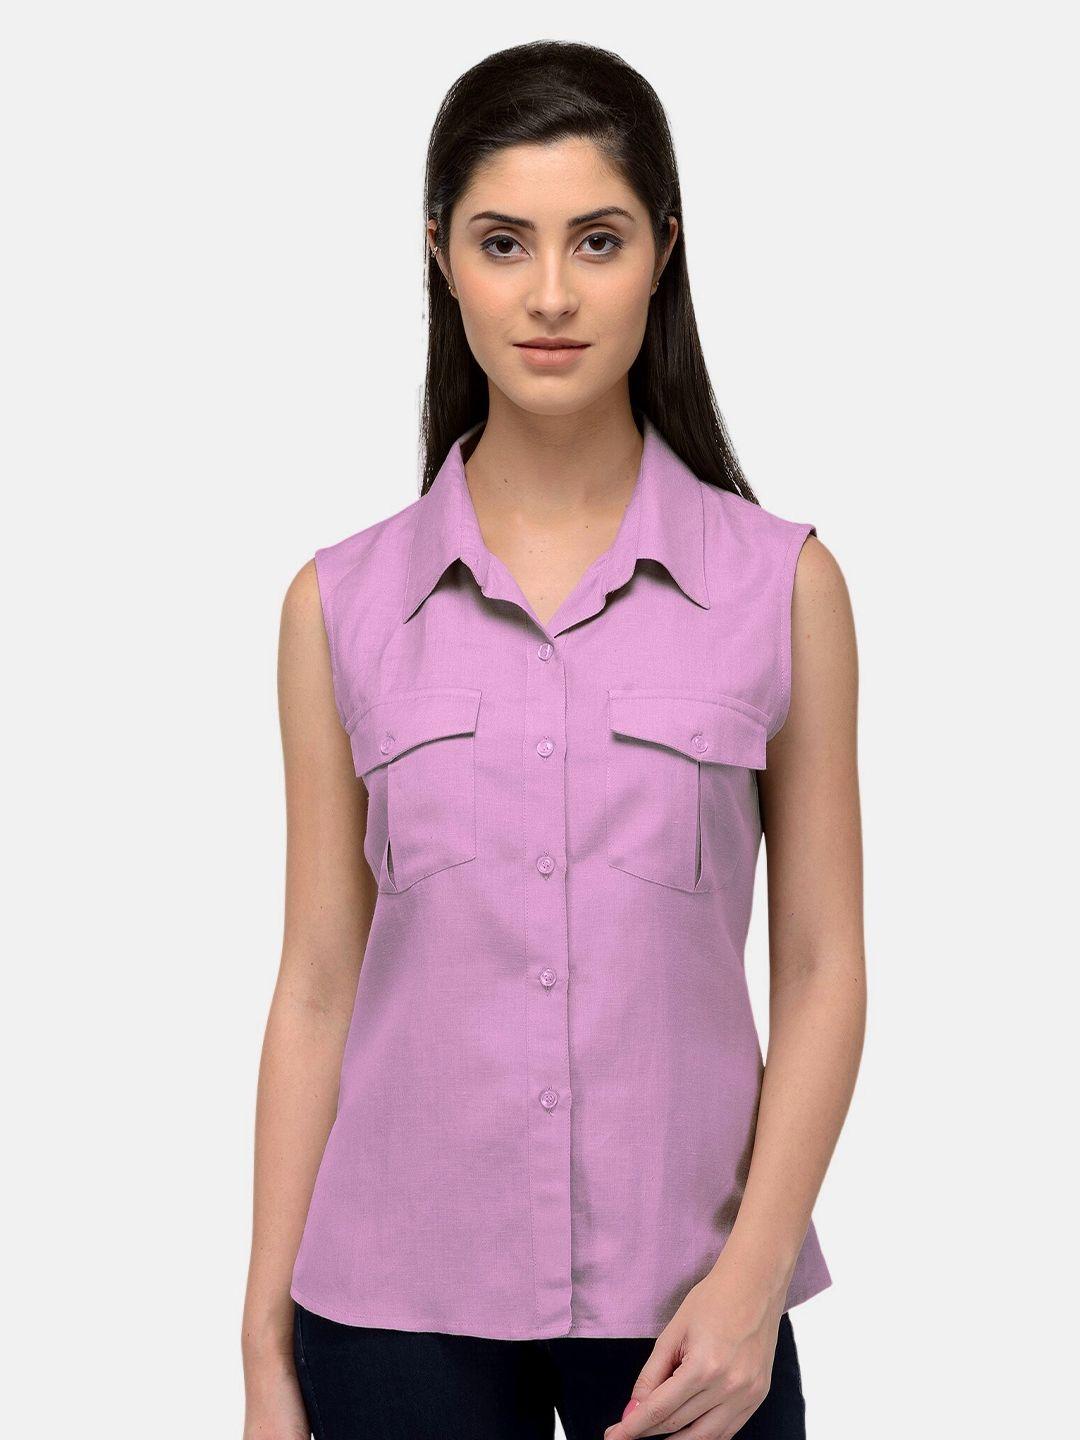 patrorna-women-pink-solid-comfort-collar-casual-shirt